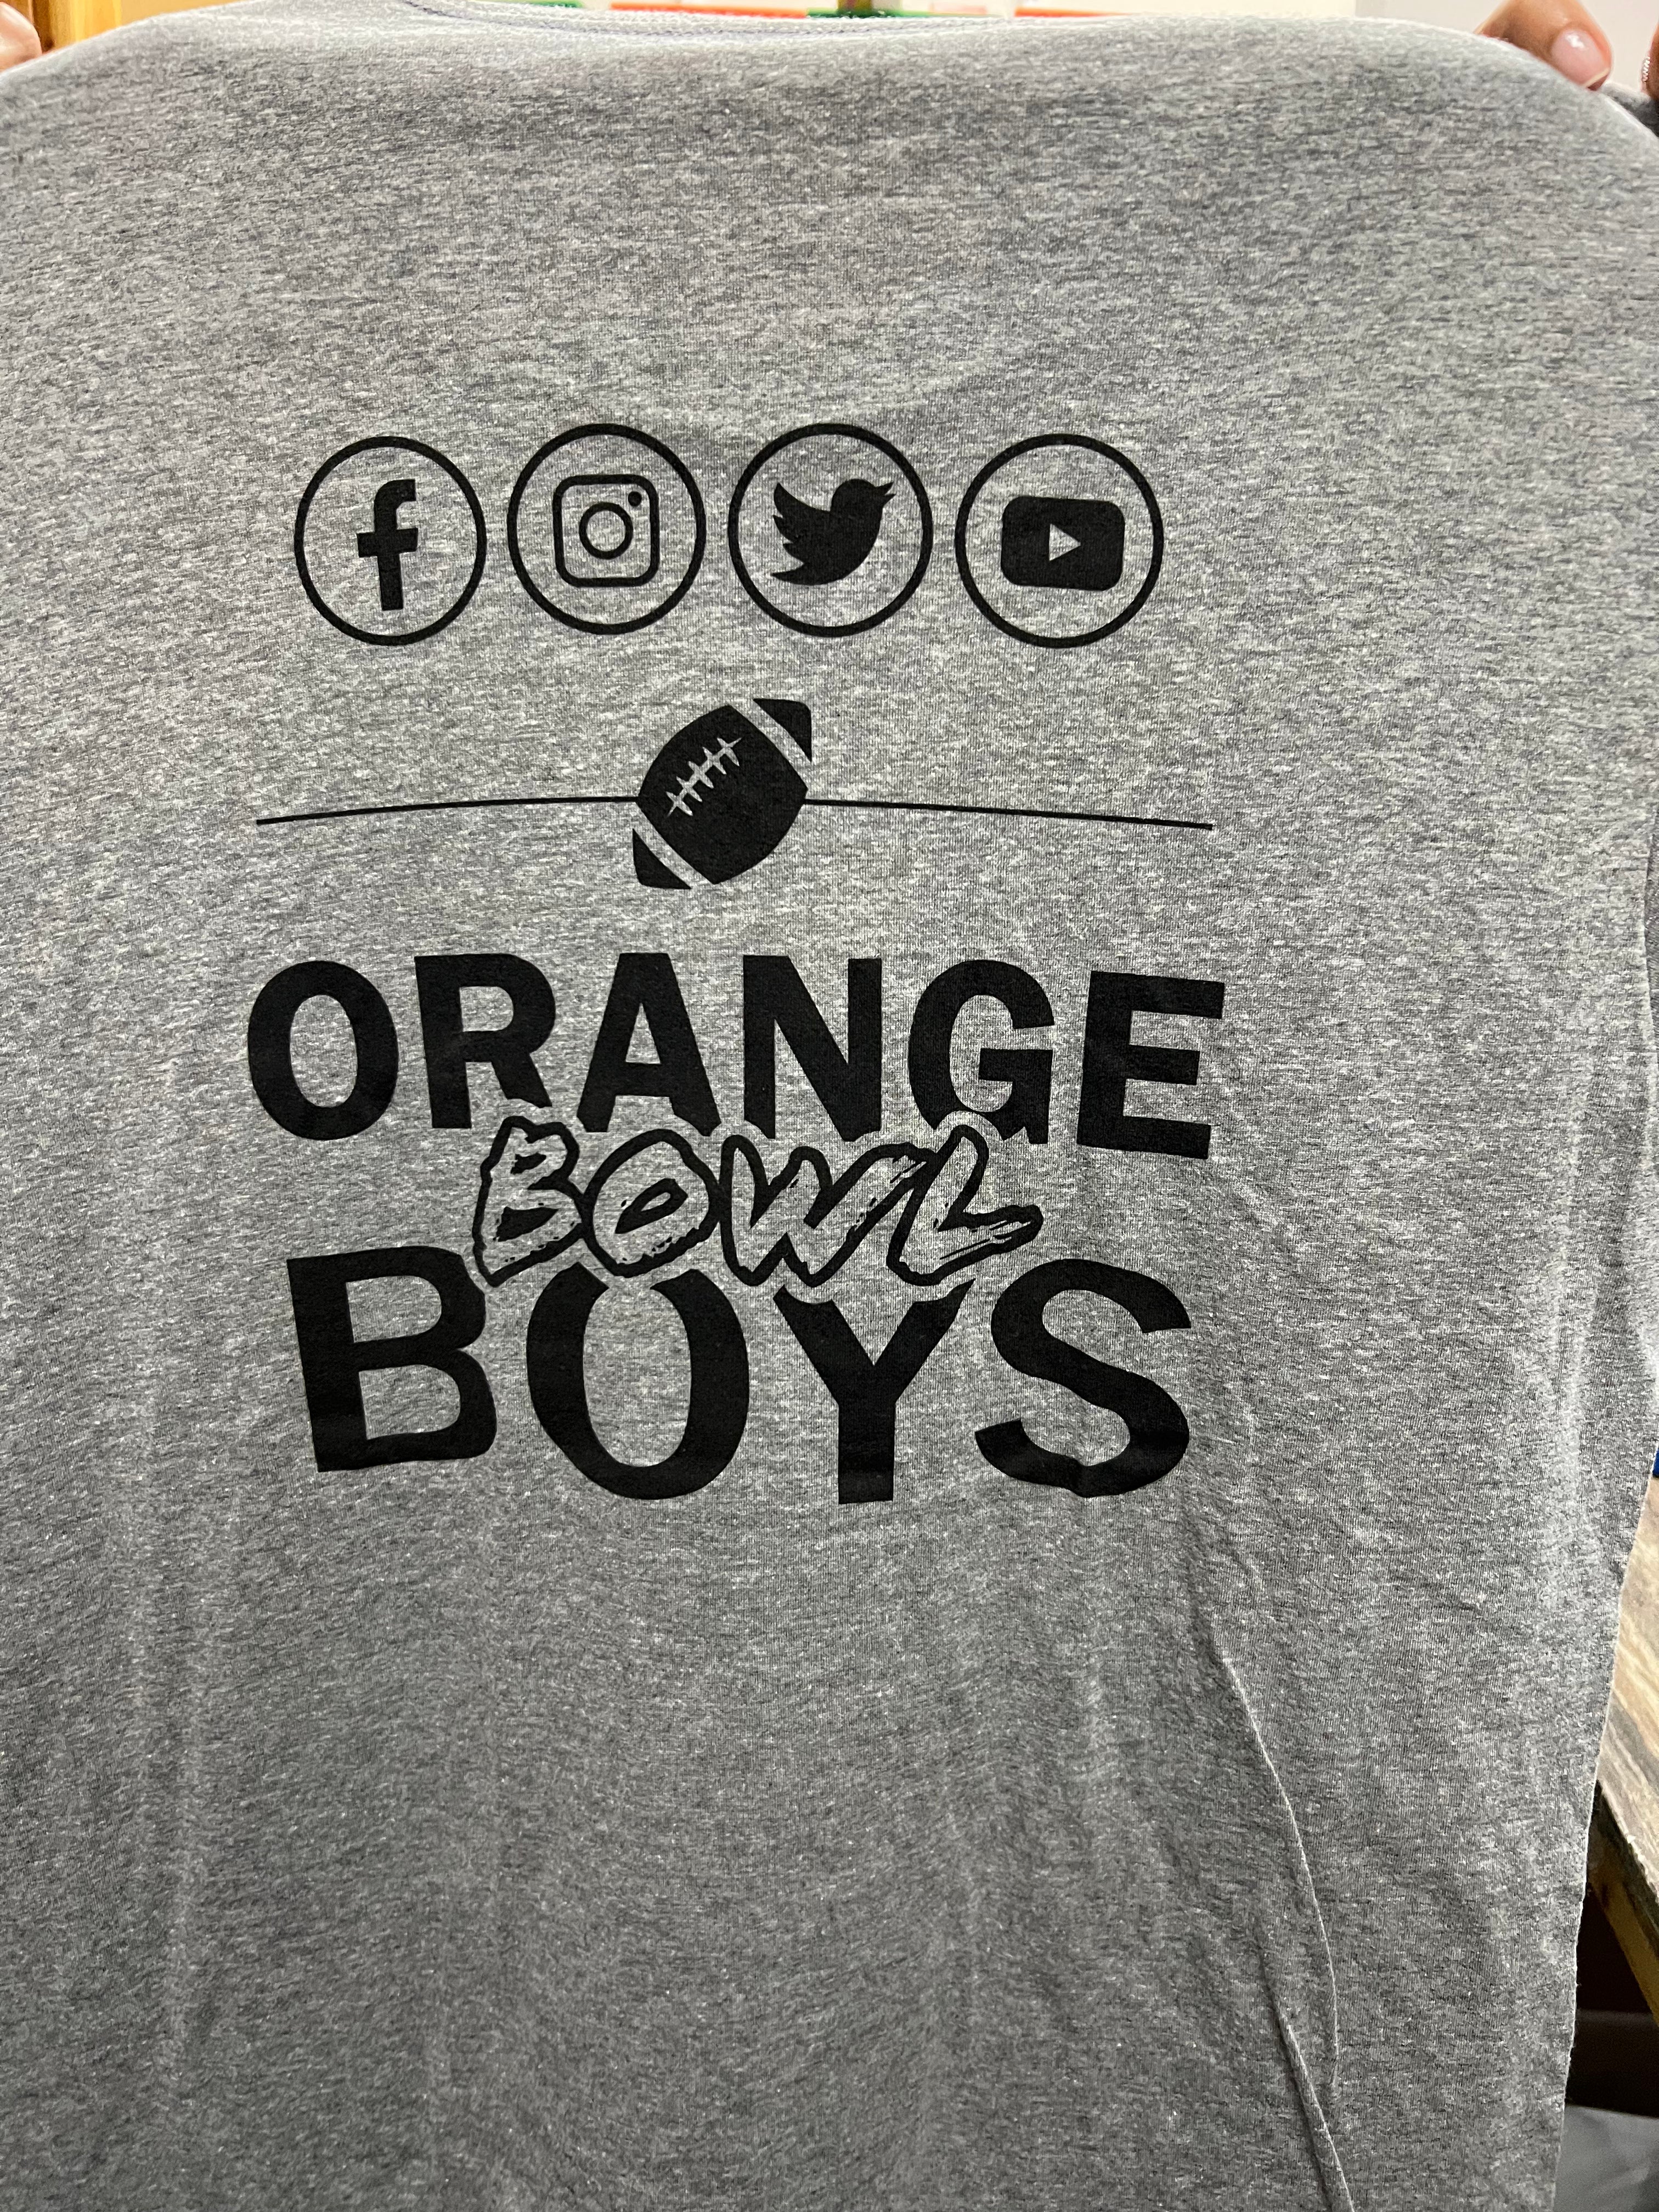 Orange Bowl Boys #OBB “Mario Era” Men’s Tri-Blend T-Shirt - Heather Grey